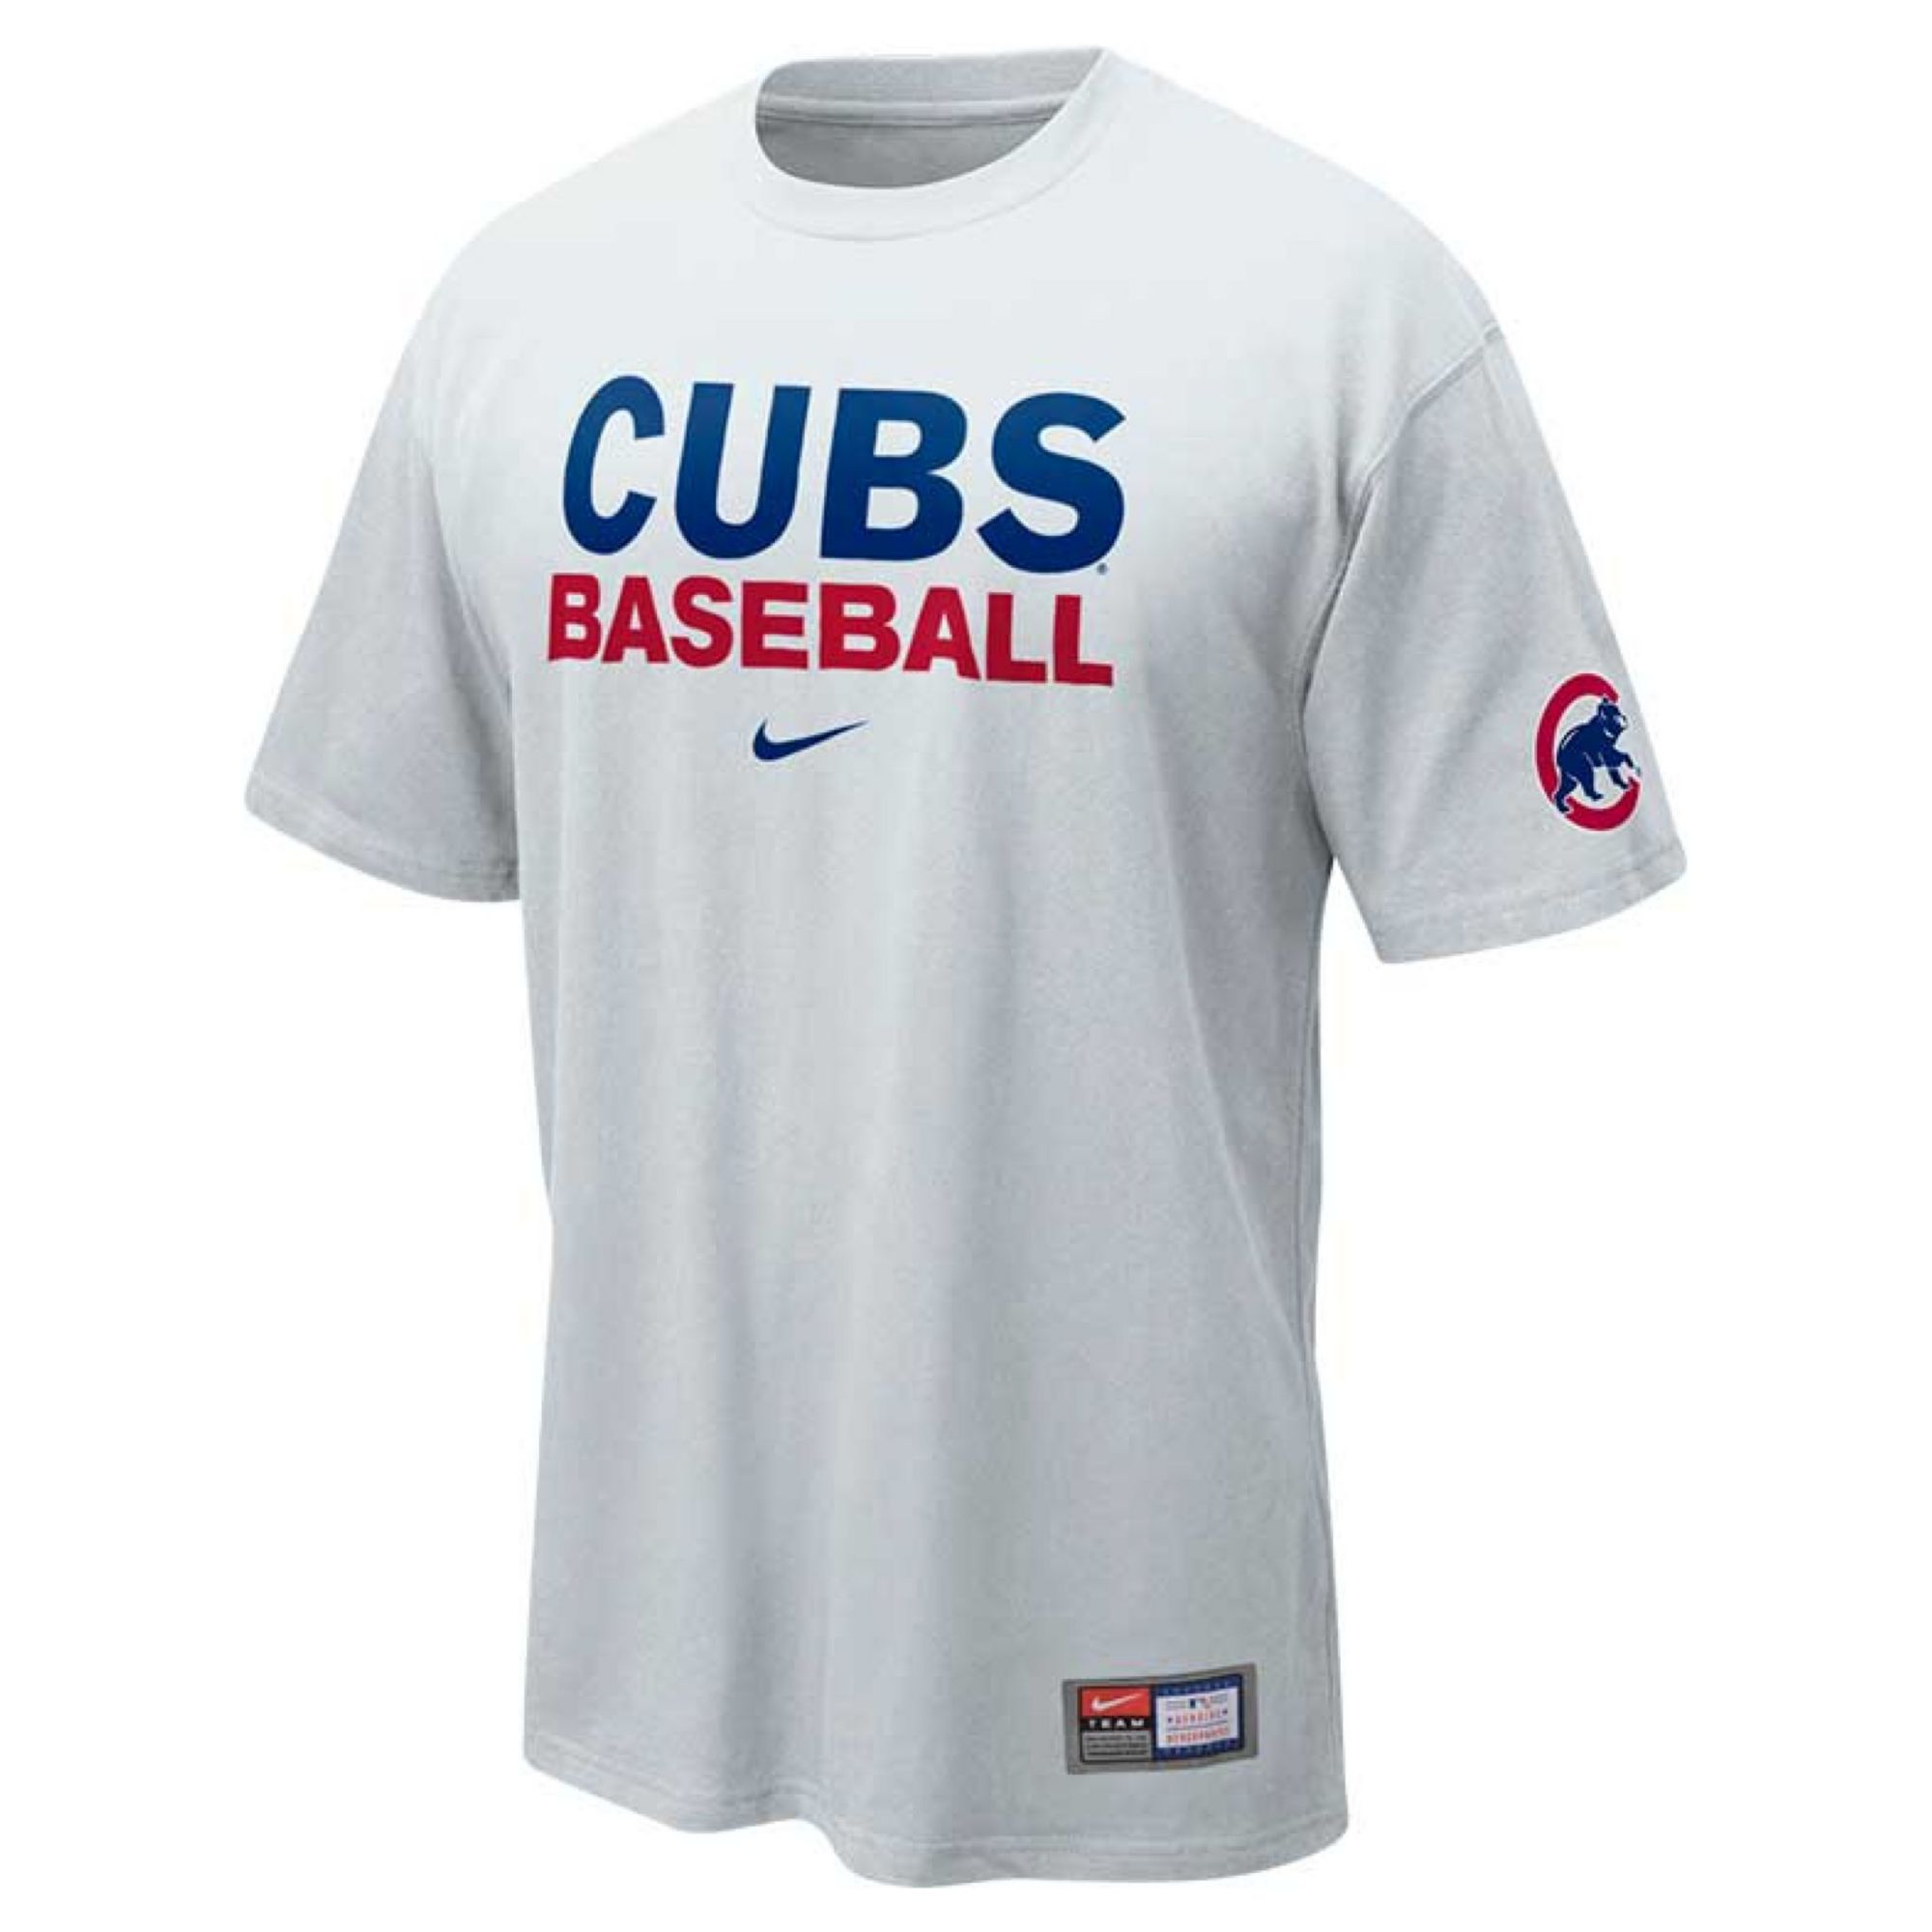 white chicago cubs shirt